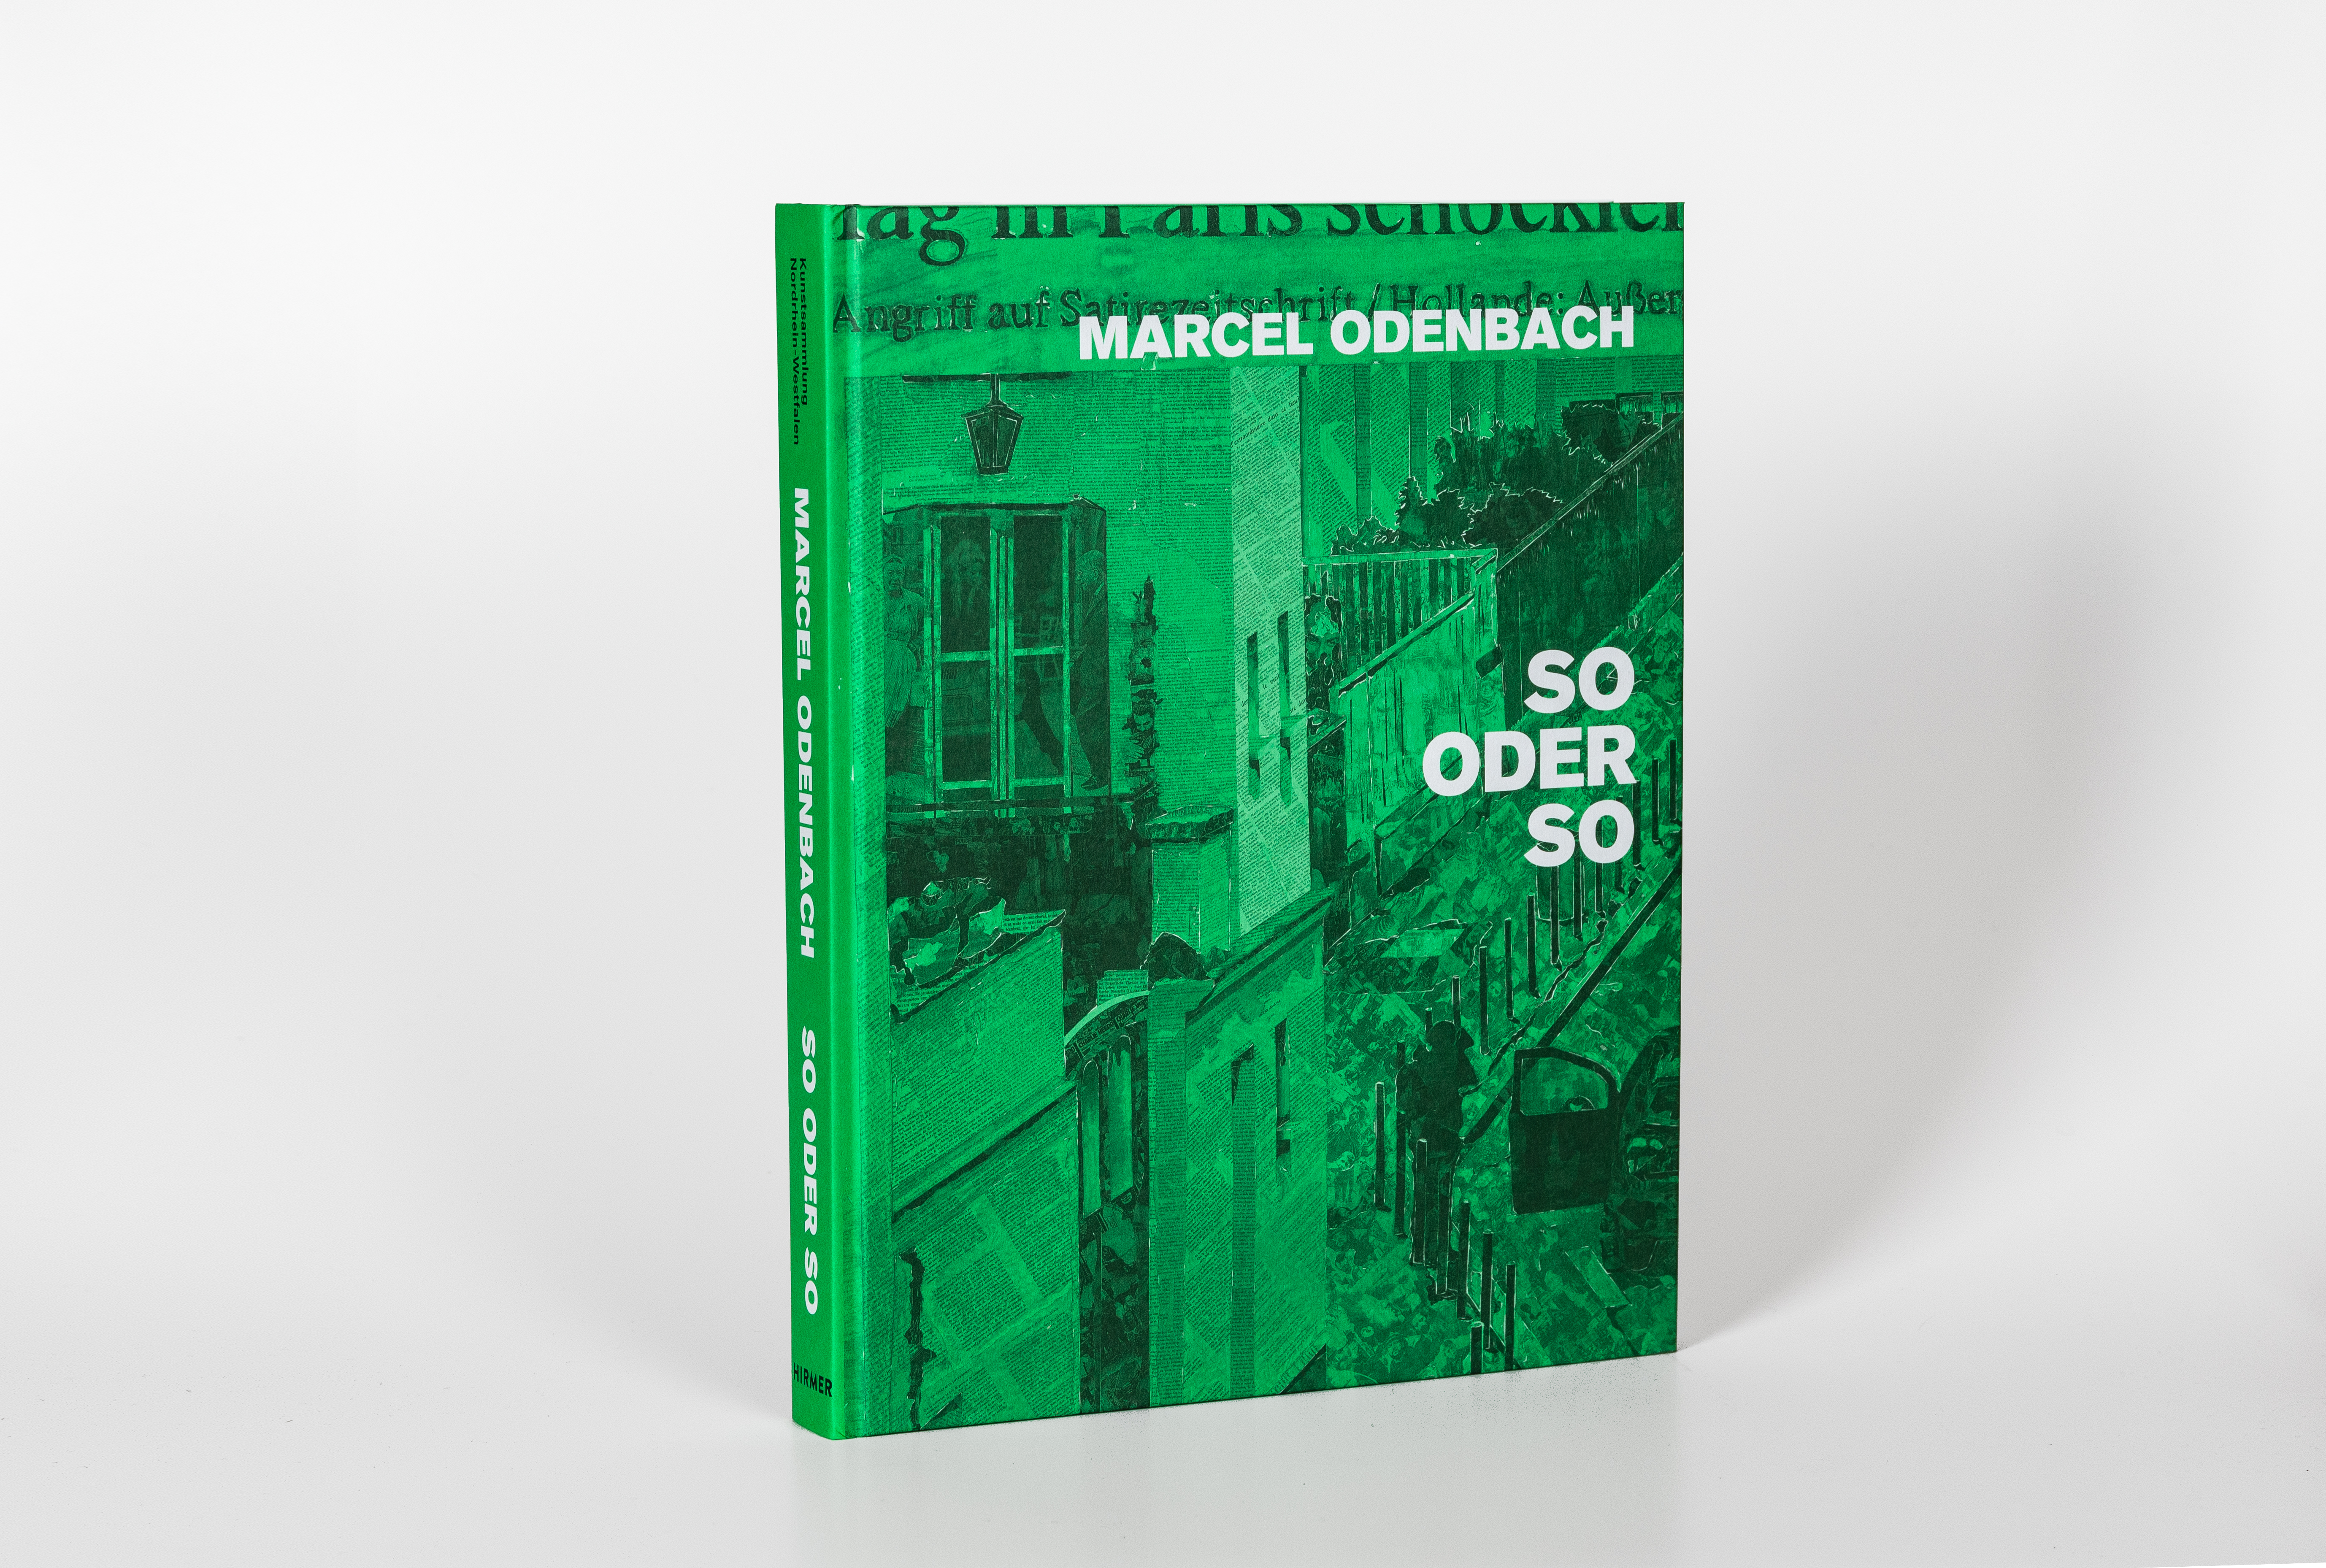 Marcel Odenbach | So oder so